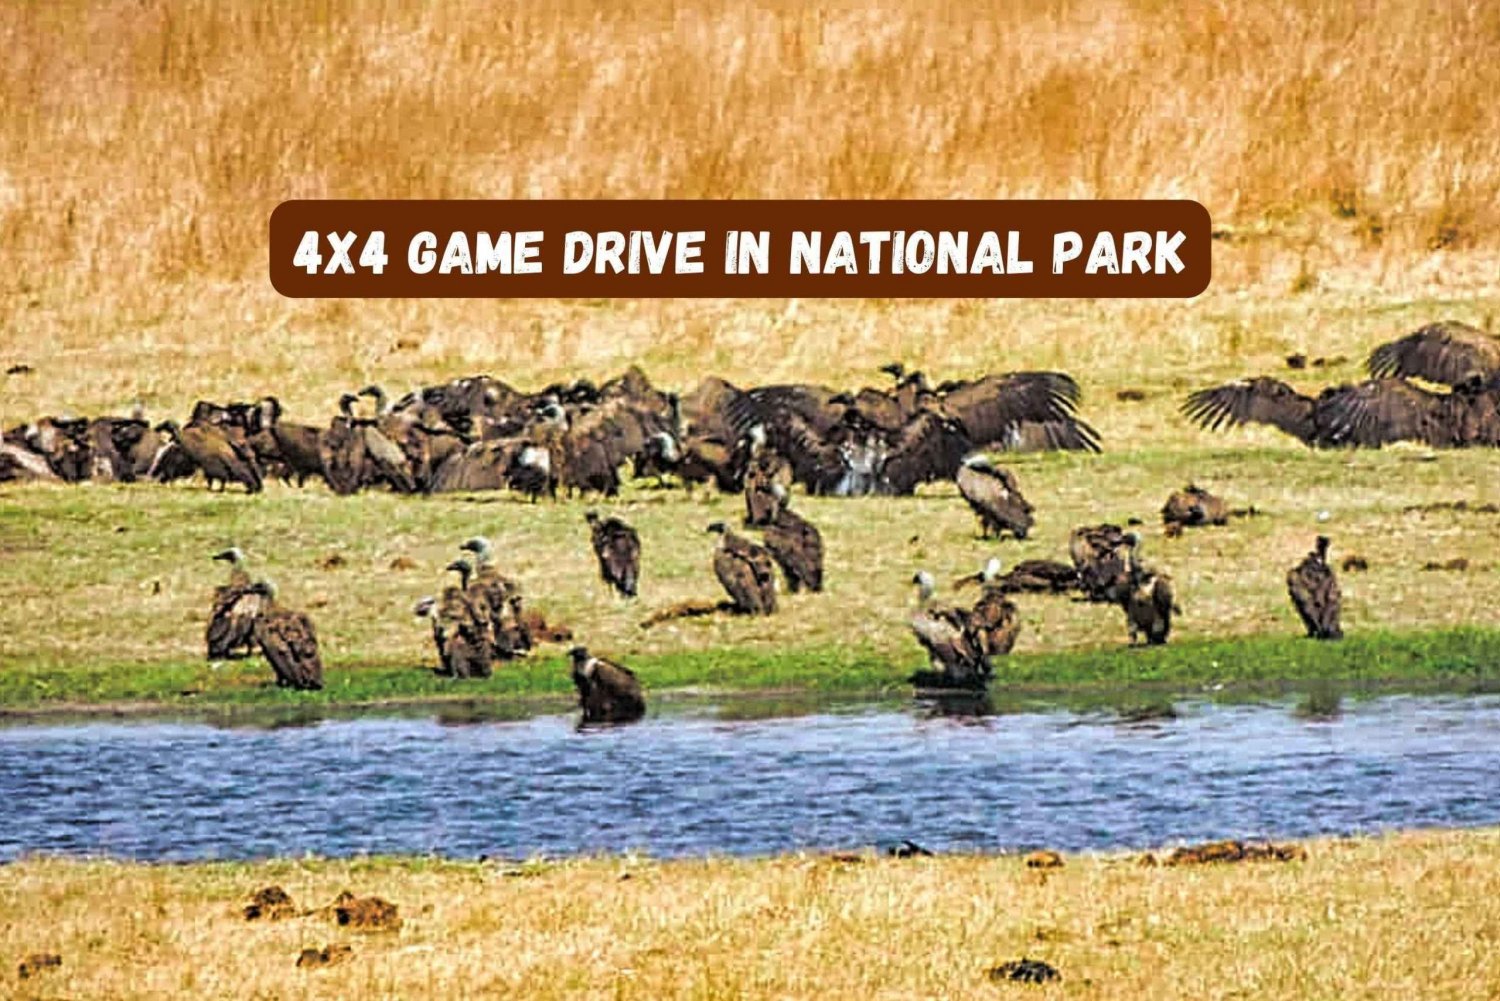 Victoria Watervallen: 4x4 Zambezi National Park Game Drive